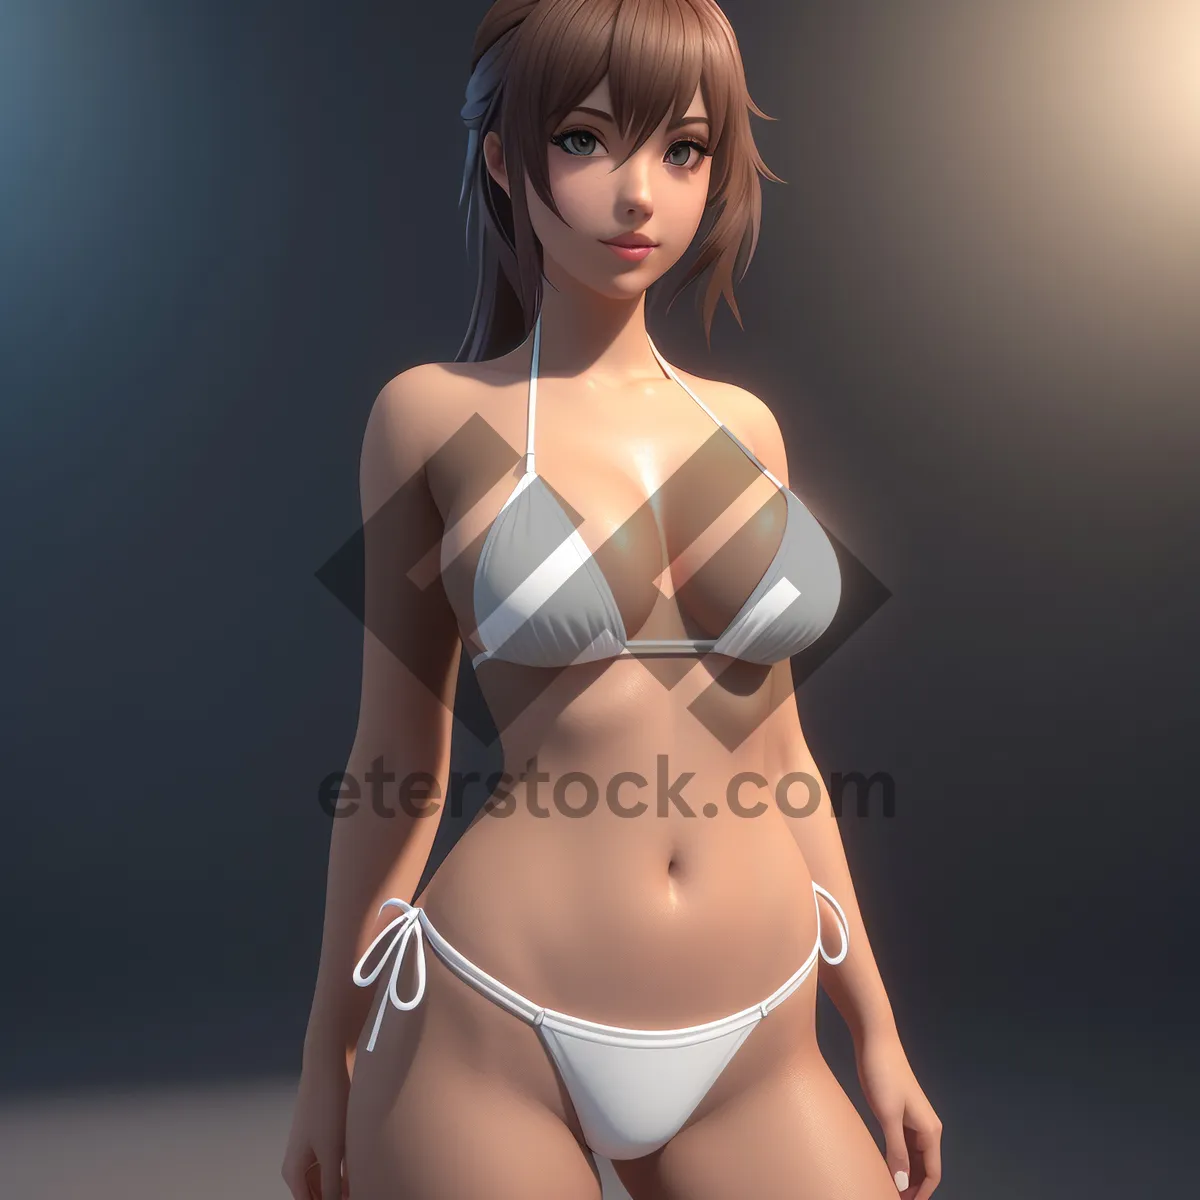 Picture of Seductive Lingerie Model Poses in Sensual Bikini